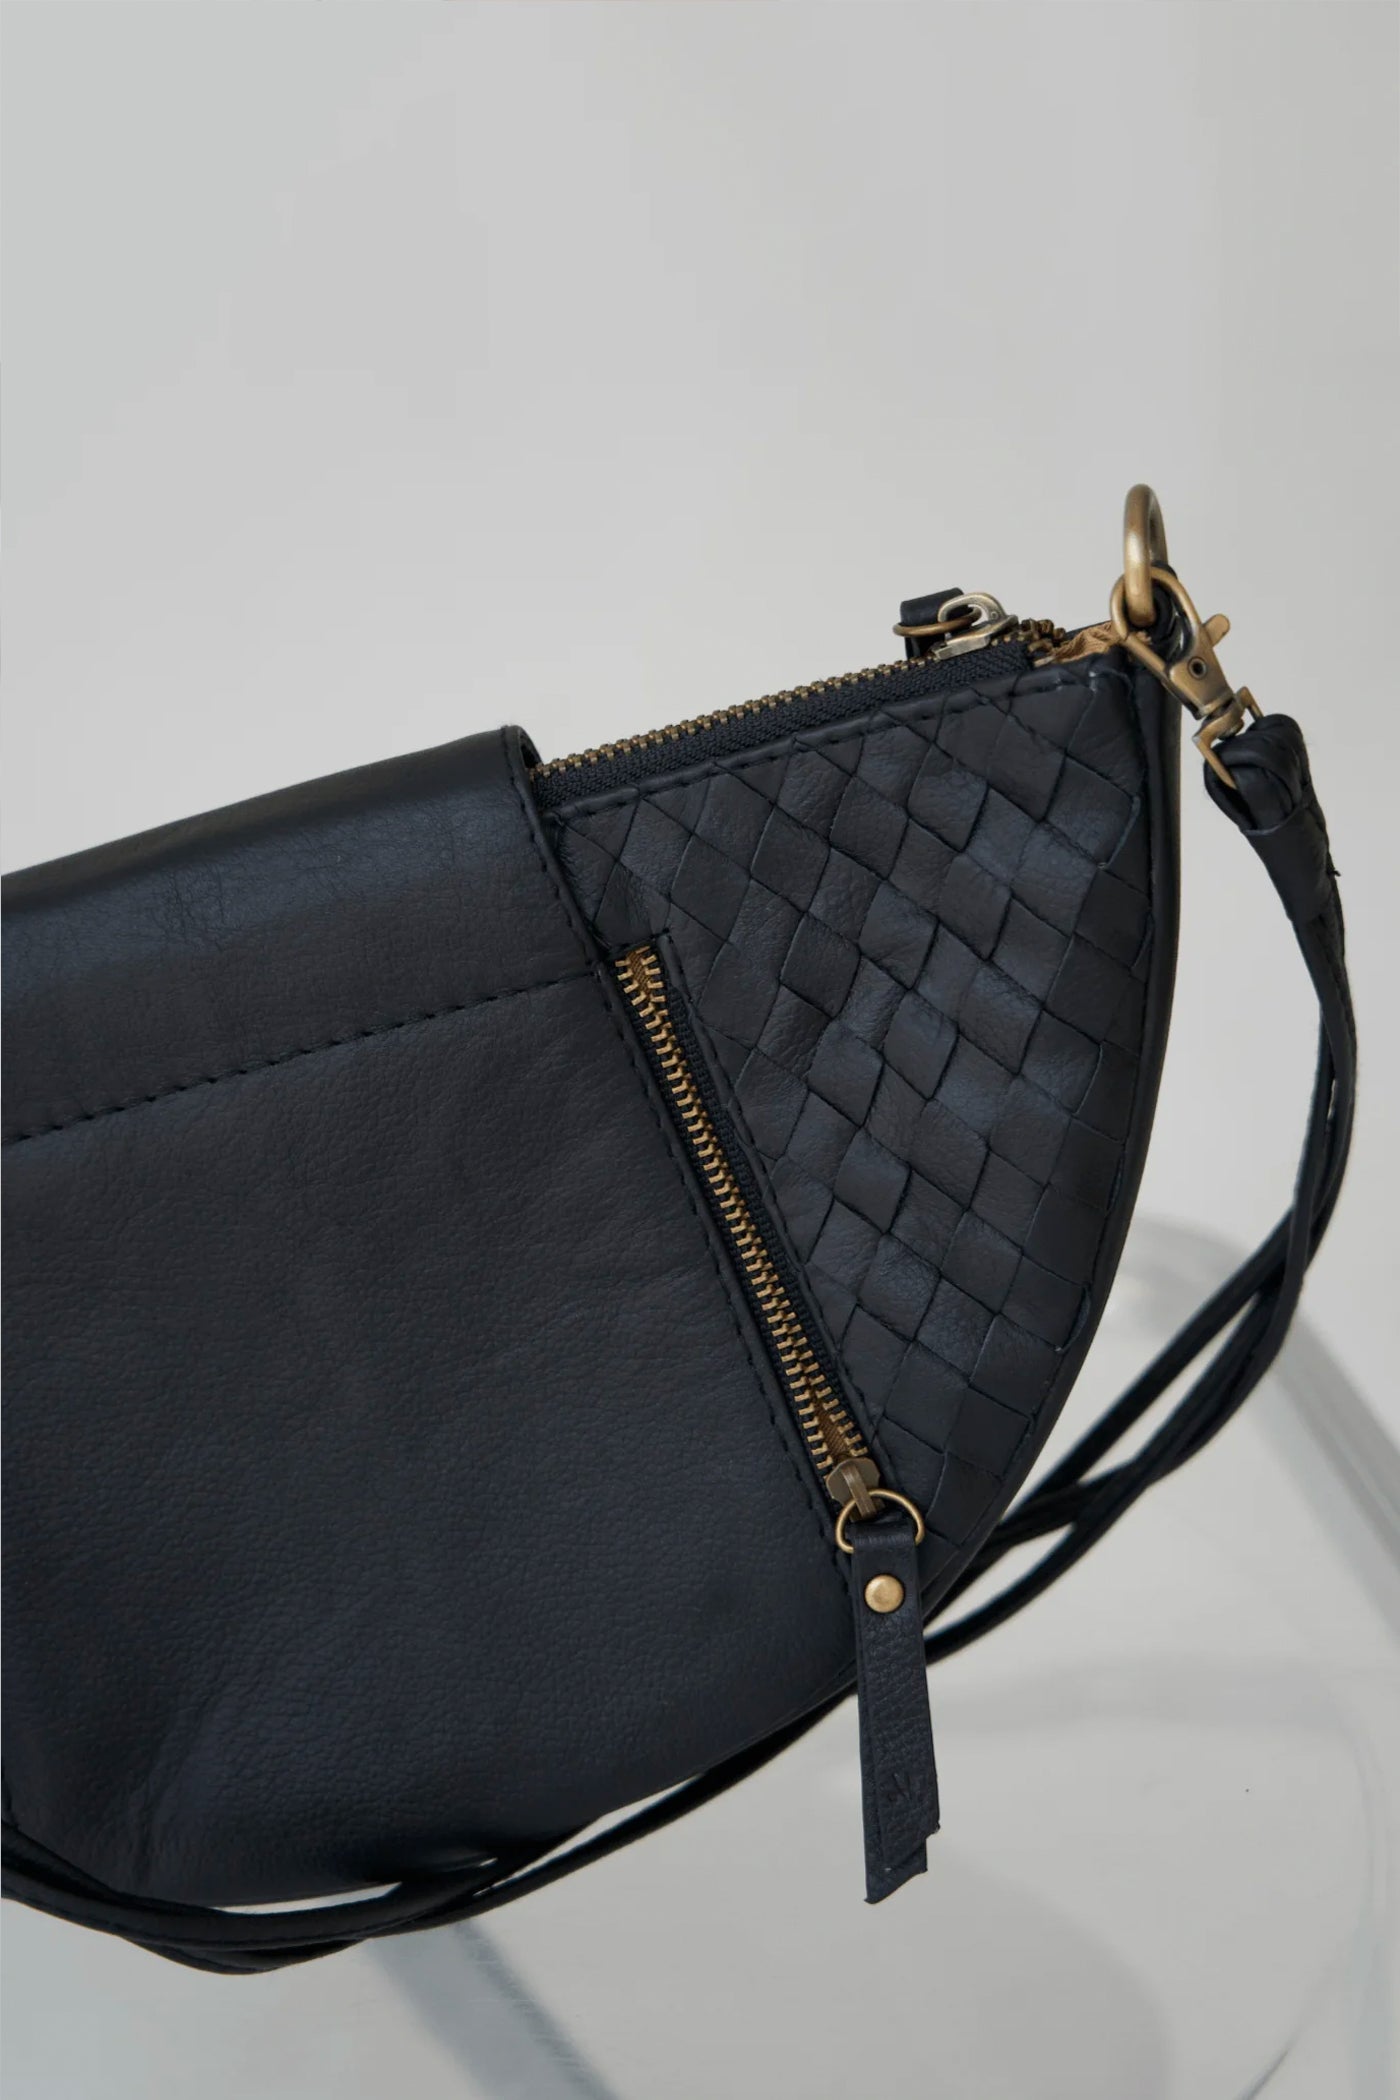 MANDRN Naomi Woven Leather Bag